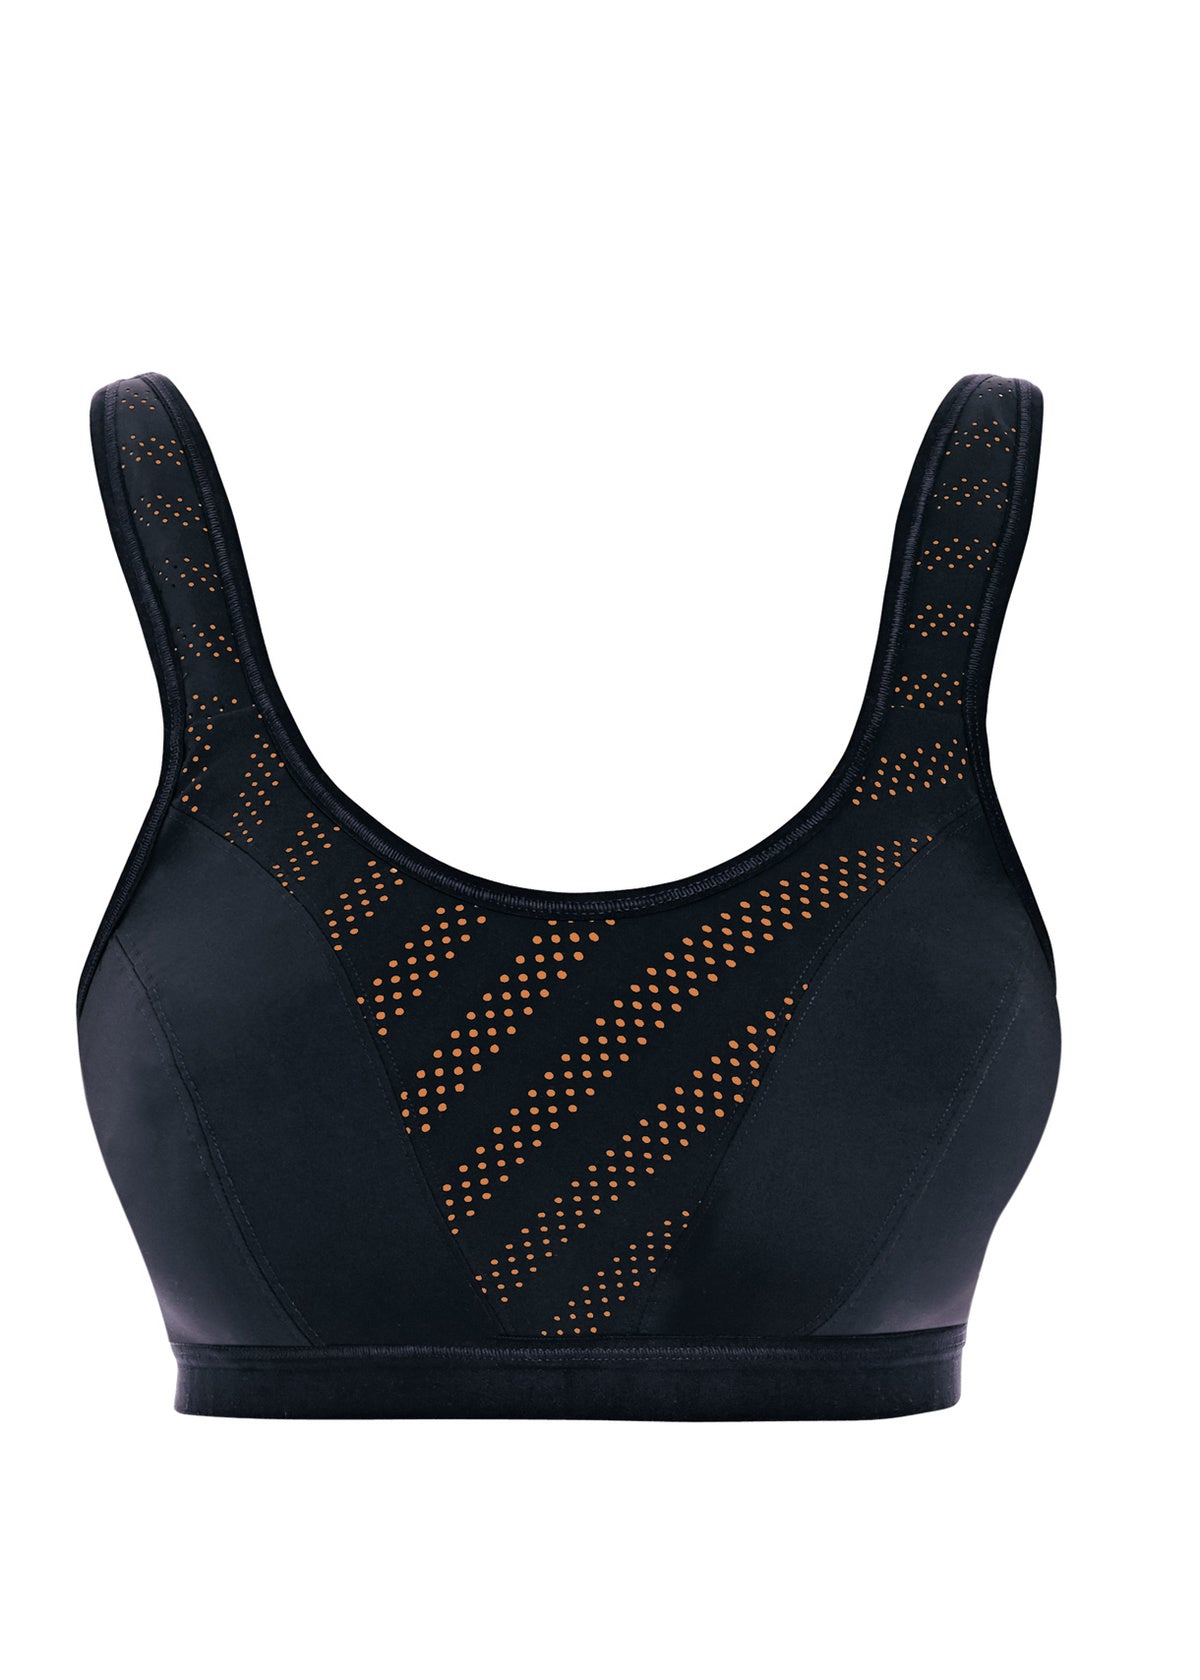 Non-Wired Sports Bra - 7341C - Black/Ice – Ashley's Lingerie & Swimwear